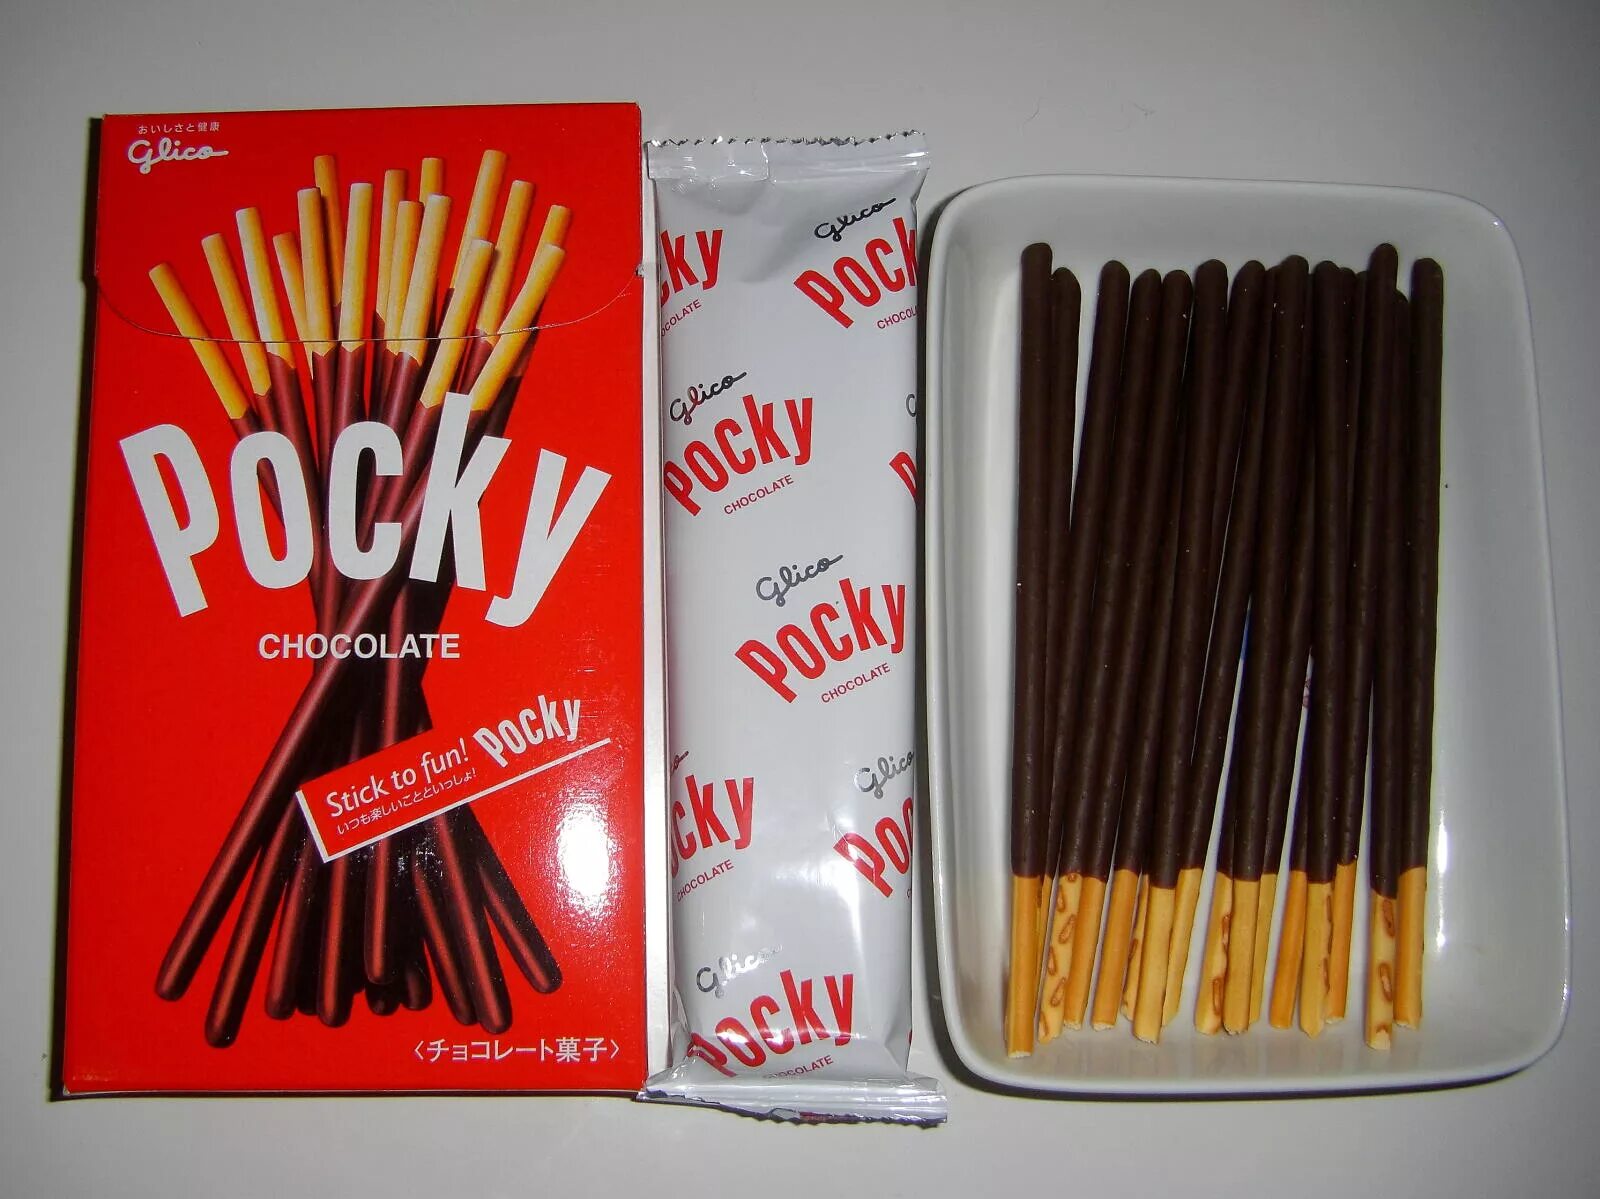 Корейские покки палочки. Шоколадные палочки Pocky. Японские сладости палочки Pocky. Шоколадные палочки Pocky Chocolate.